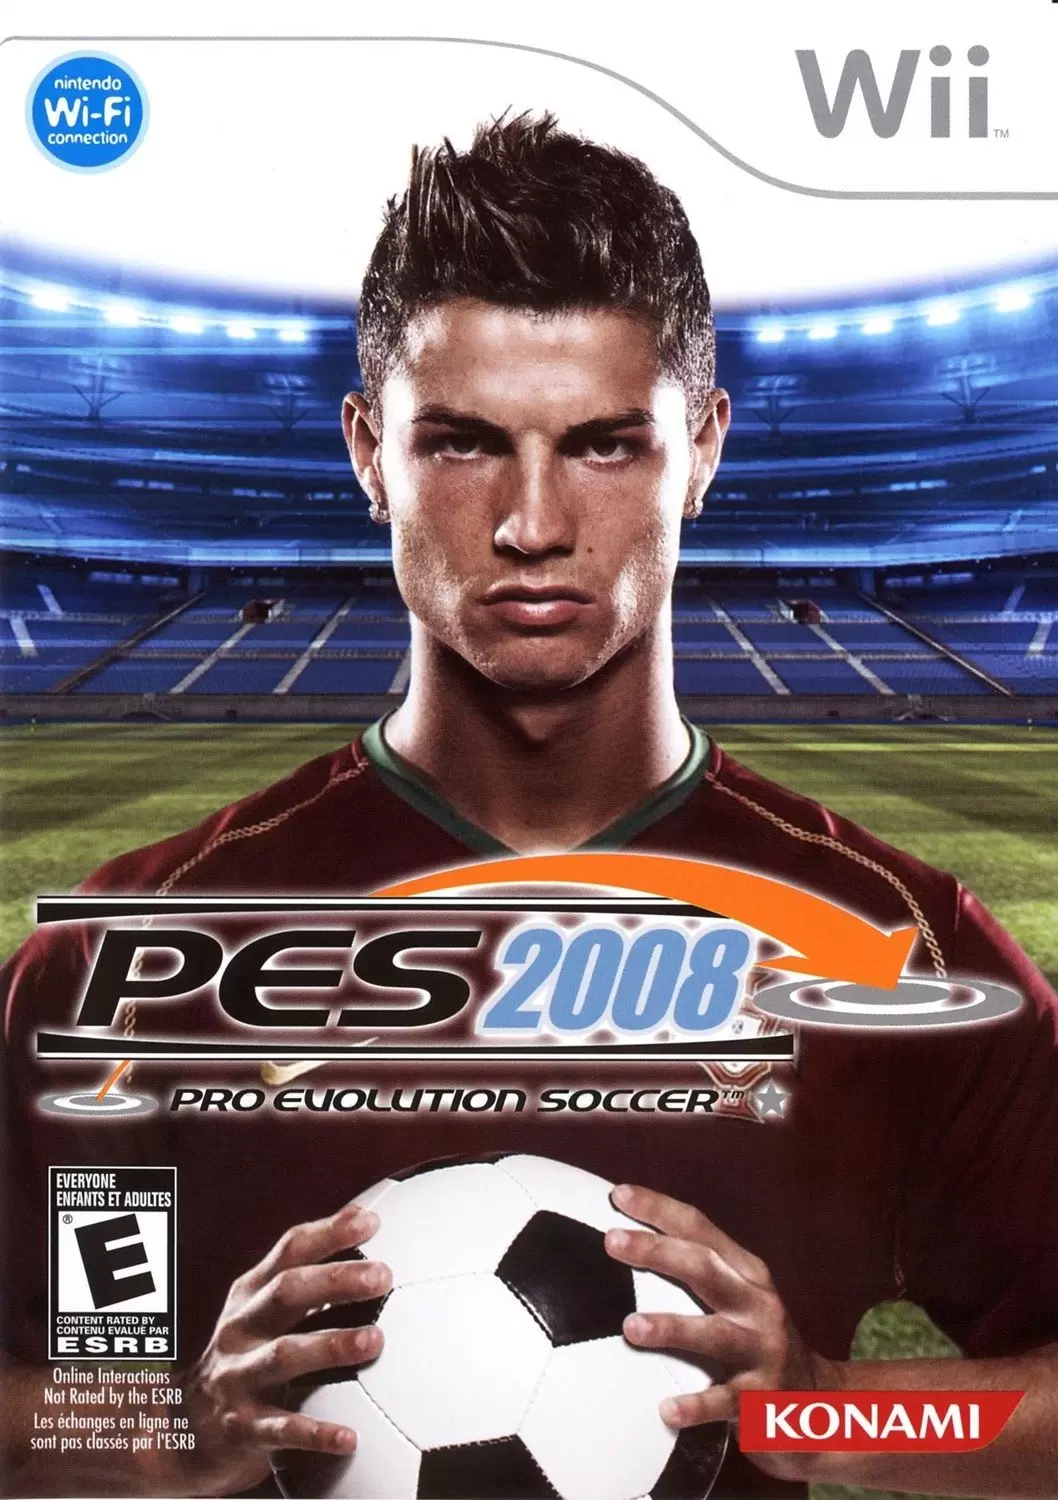 Nintendo Wii Games - Pro Evolution Soccer 2008